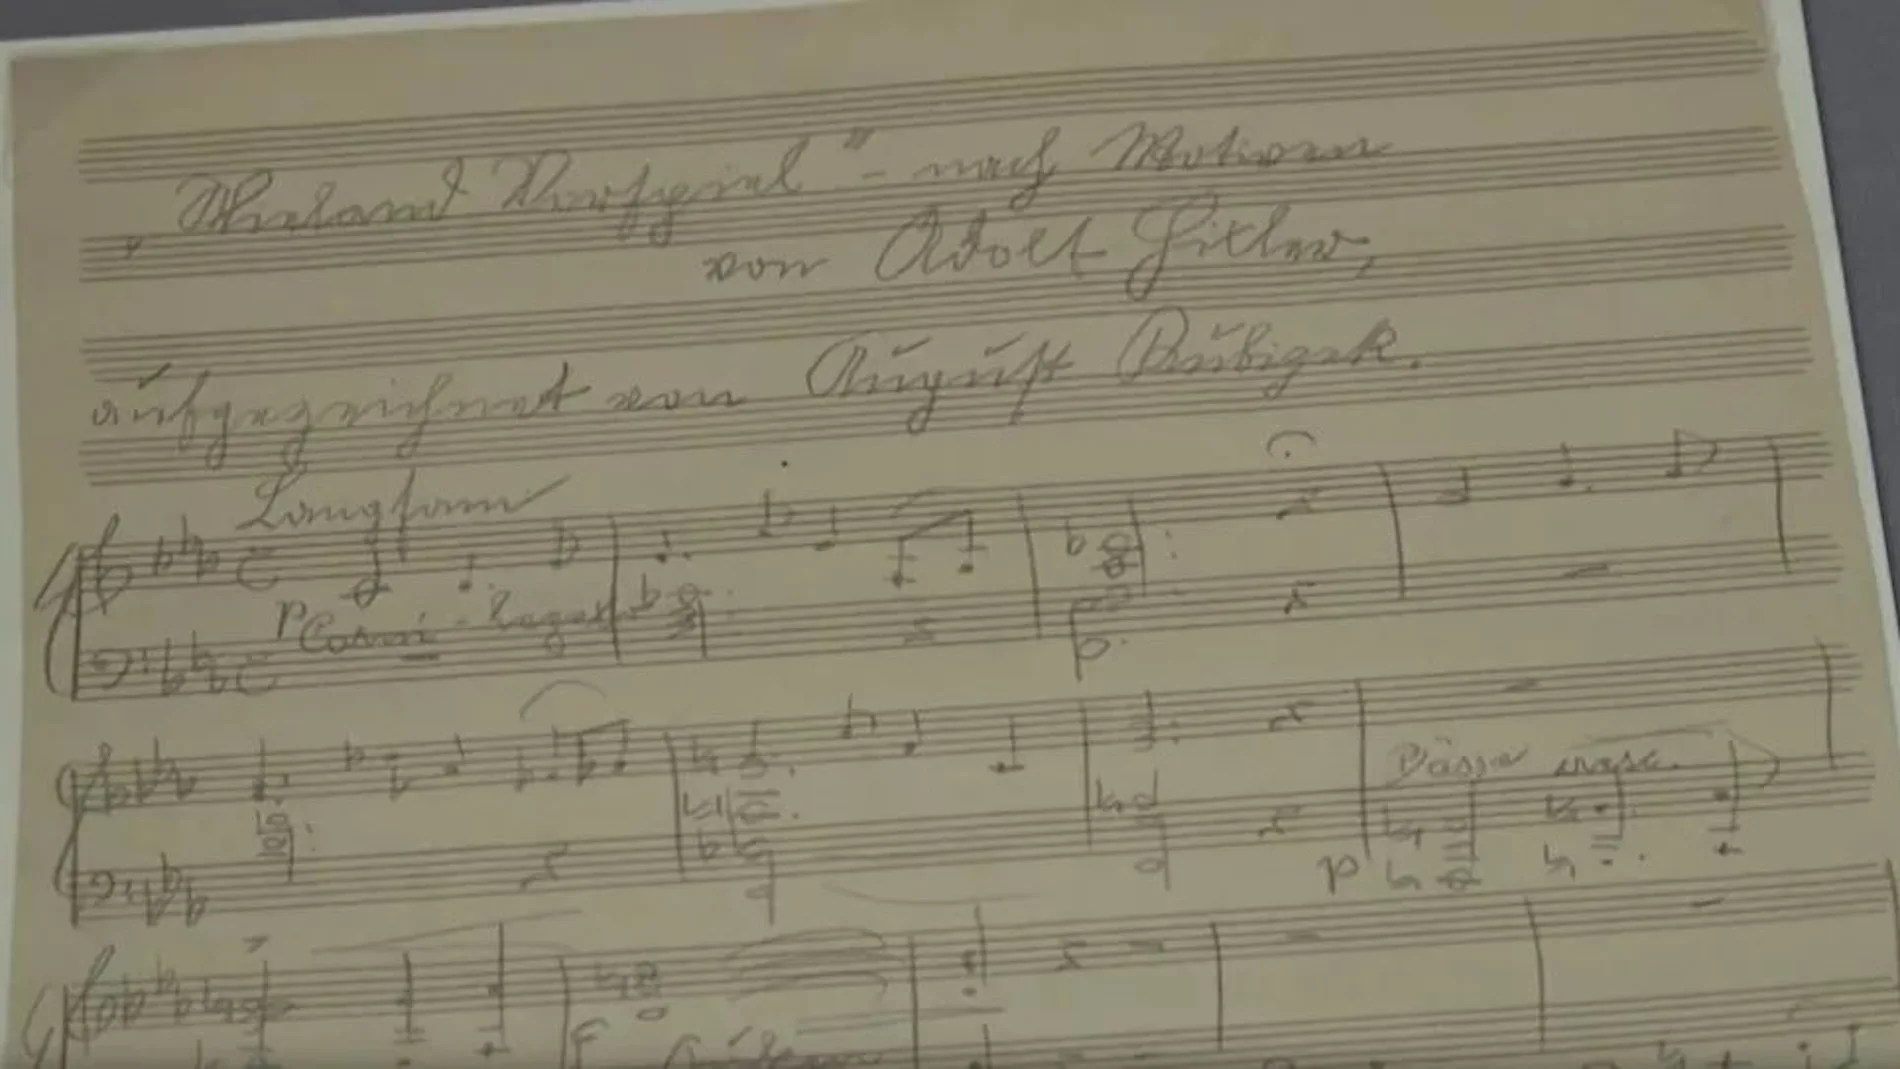 Detalle de la partitura de la ópera que dejó Hitler inacabada